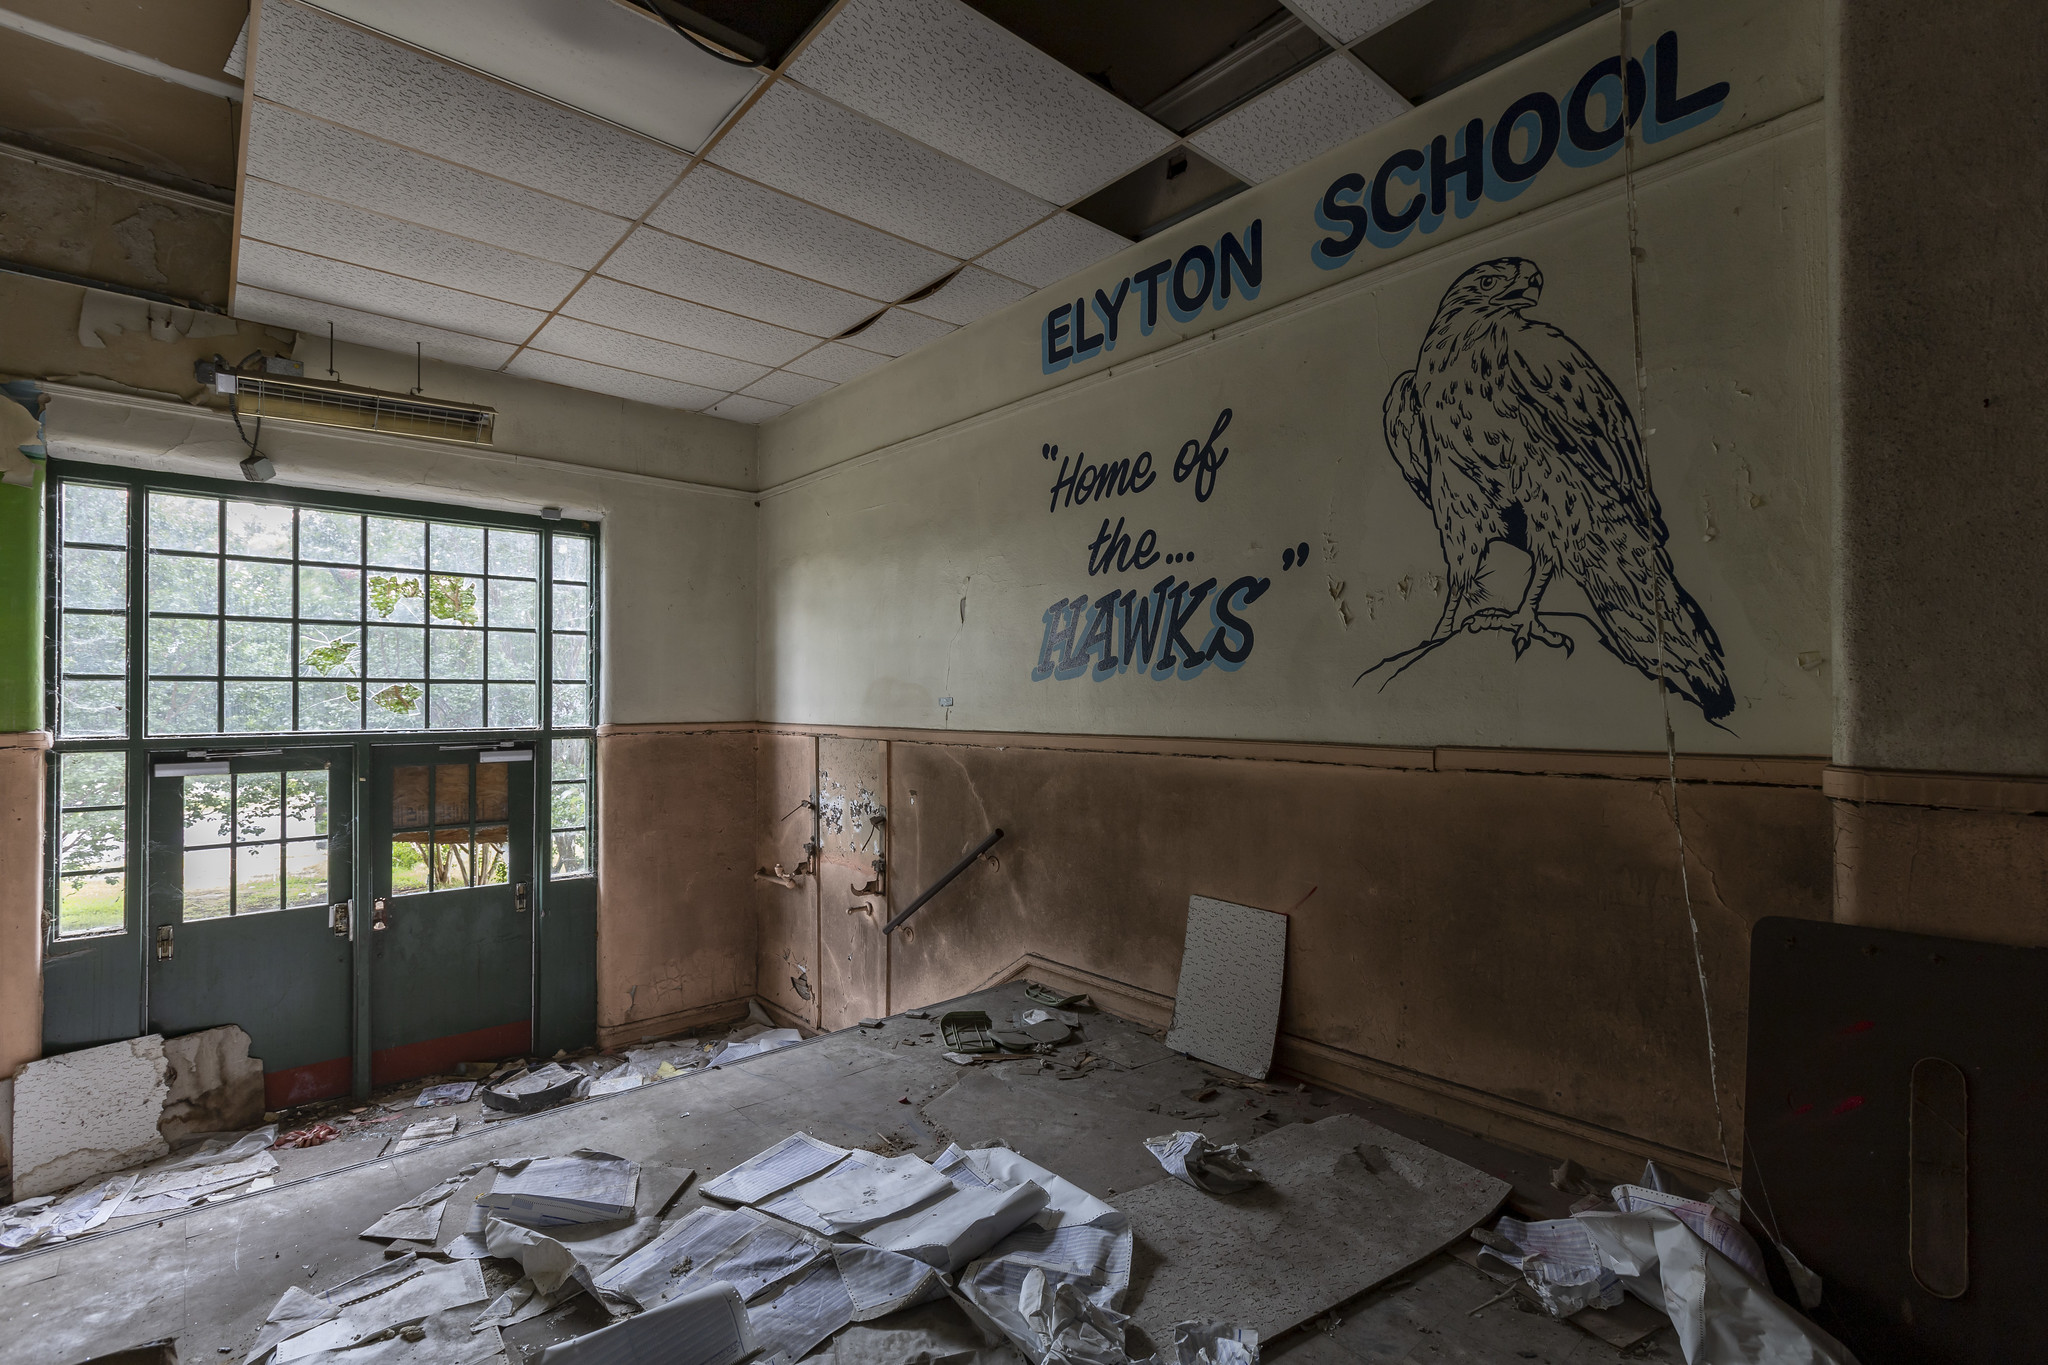 Elyton School